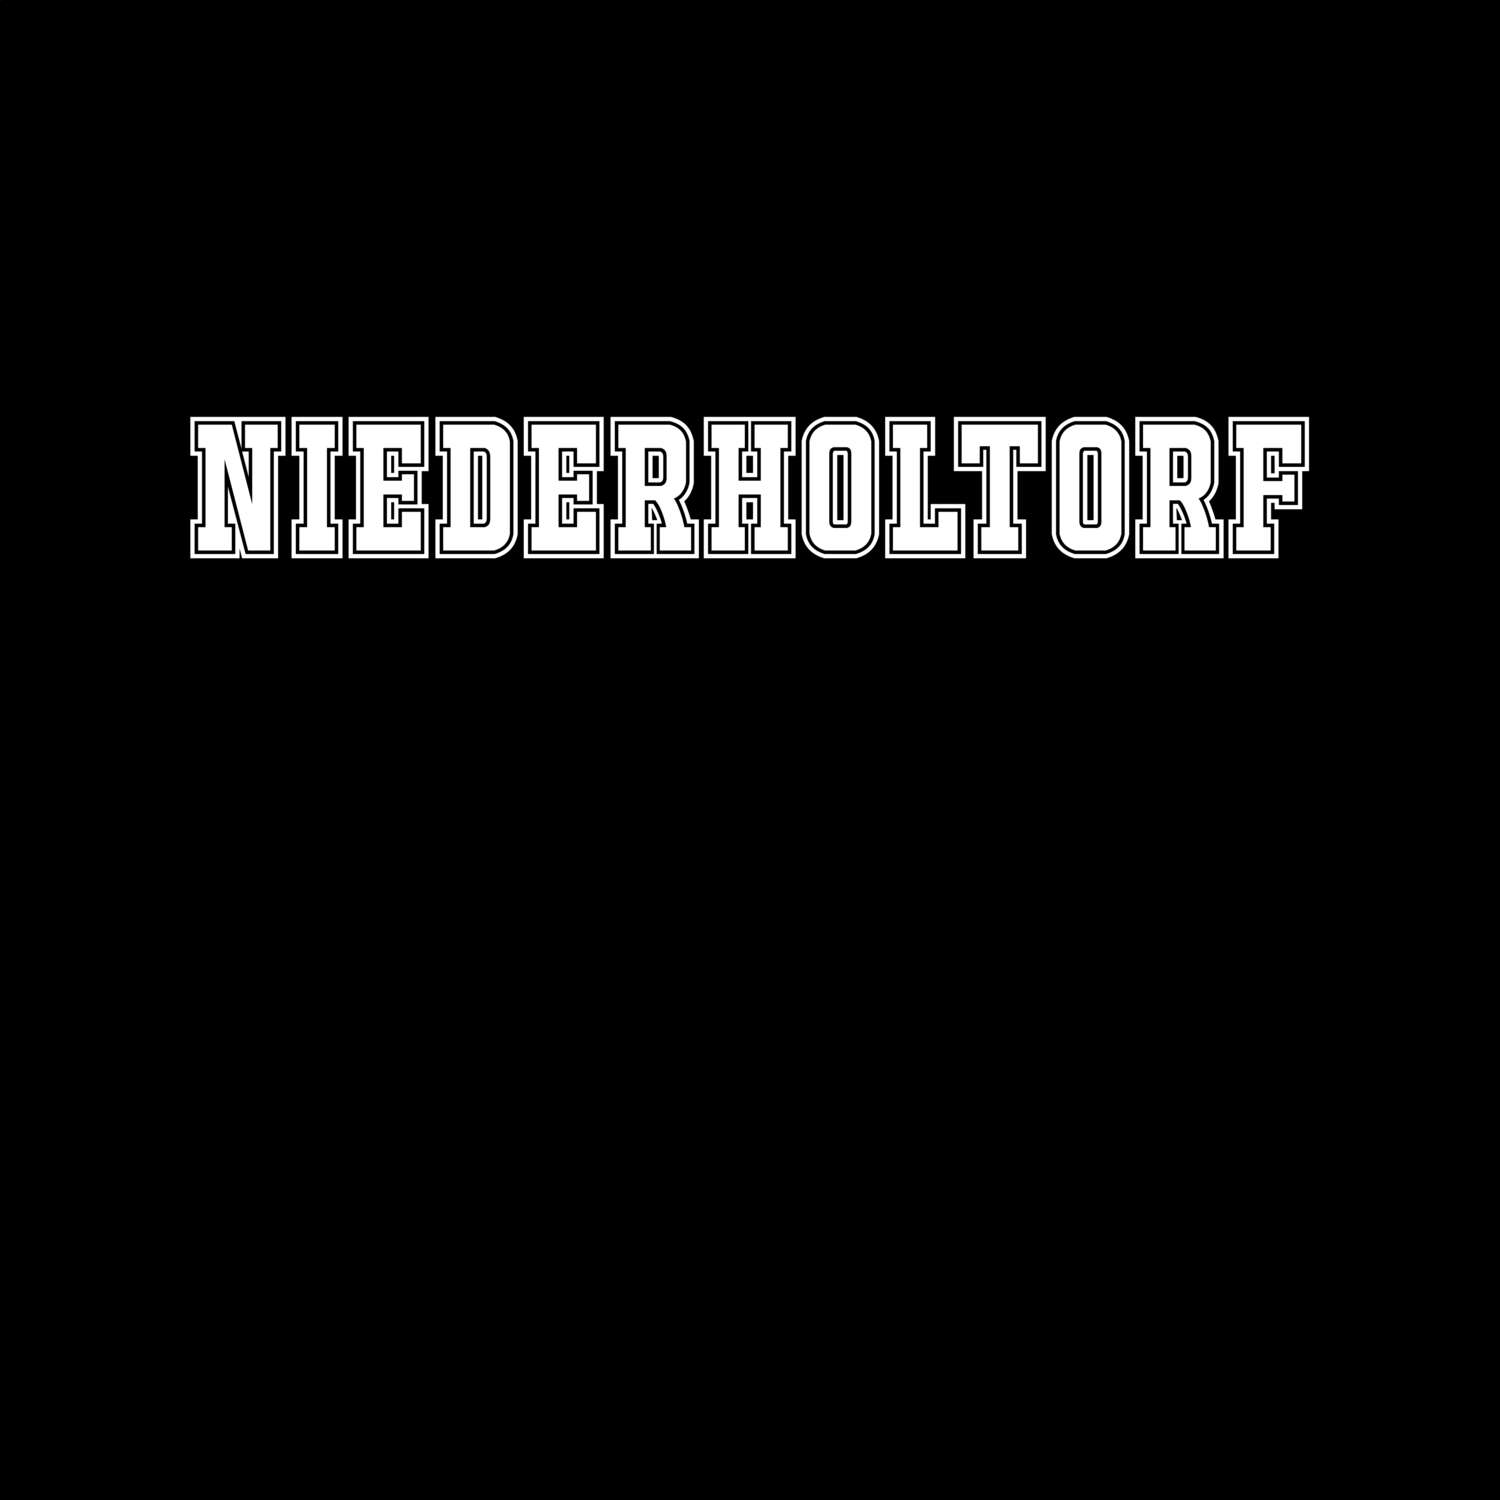 Niederholtorf T-Shirt »Classic«